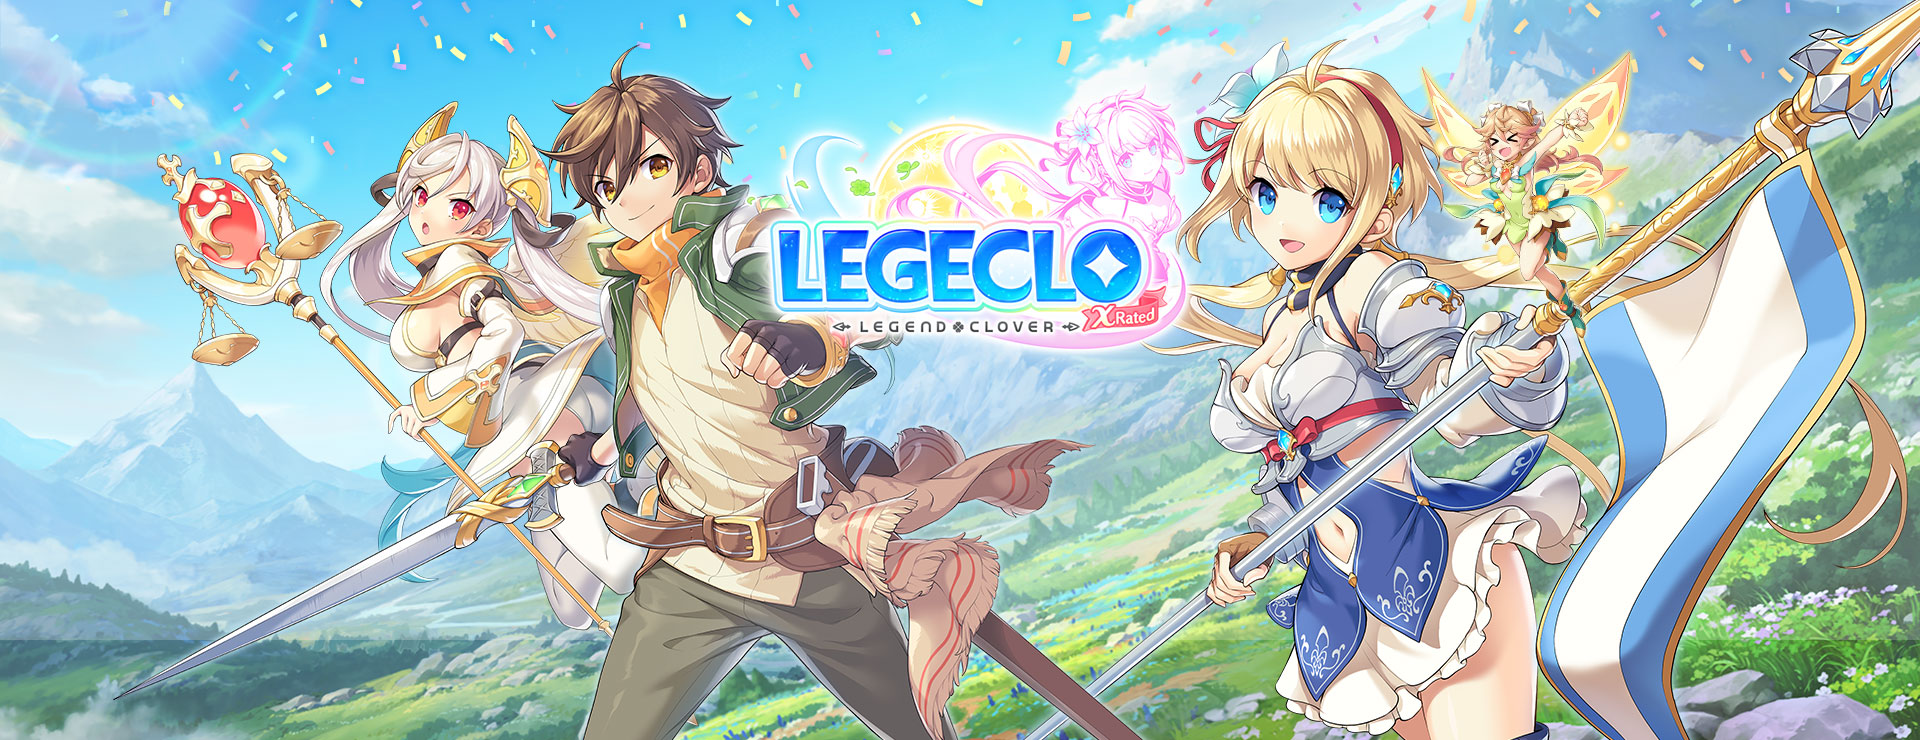 Legeclo: Legend Clover X Rated - Turówka RPG Gra